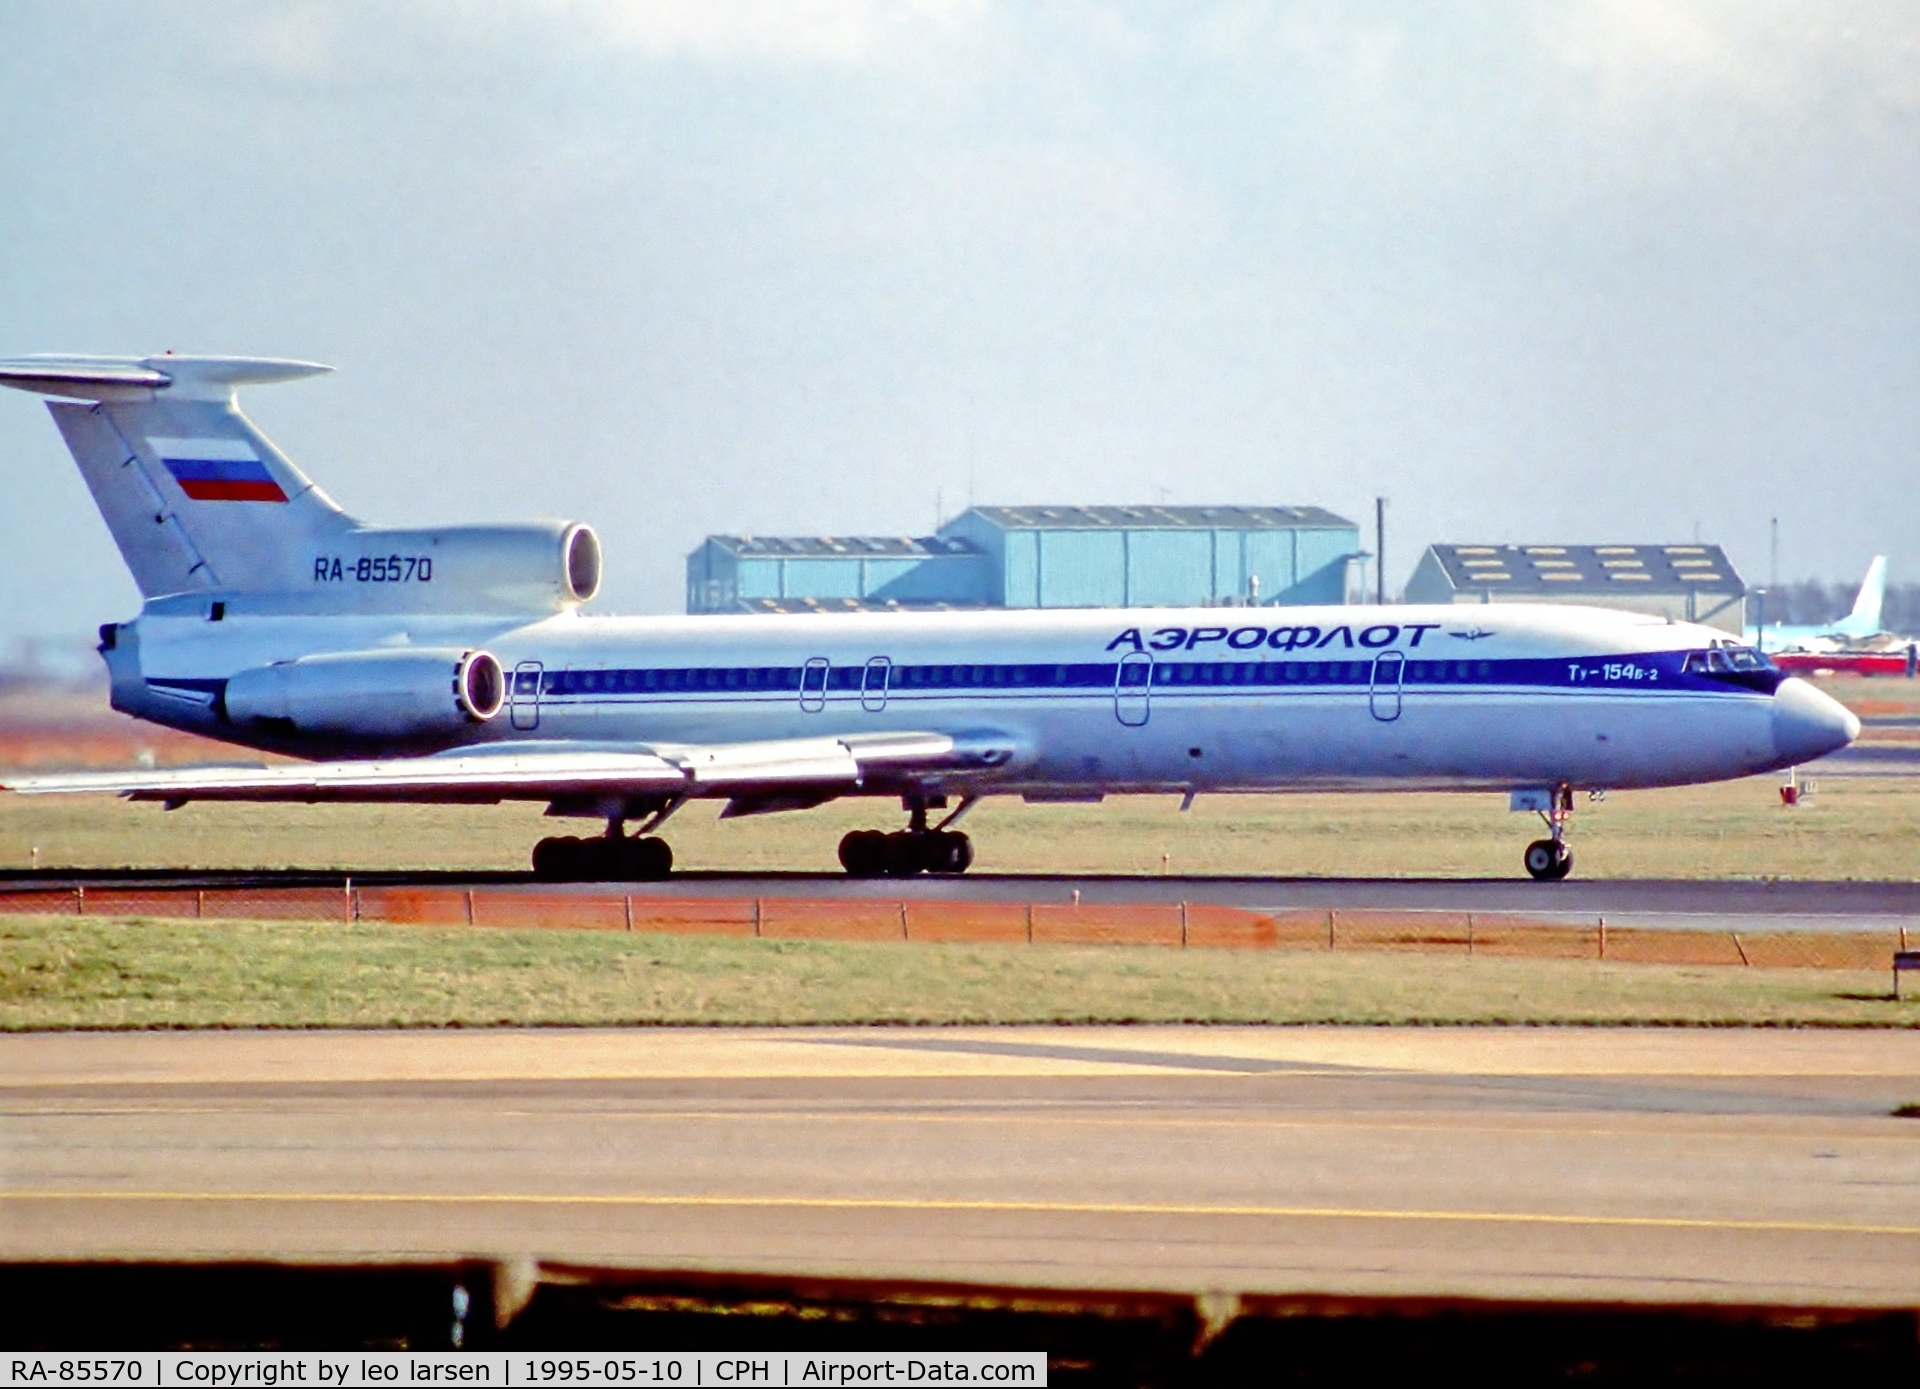 RA-85570, 1983 Tupolev Tu-154B-2 C/N 83A570, Copenhagen 10.3.95